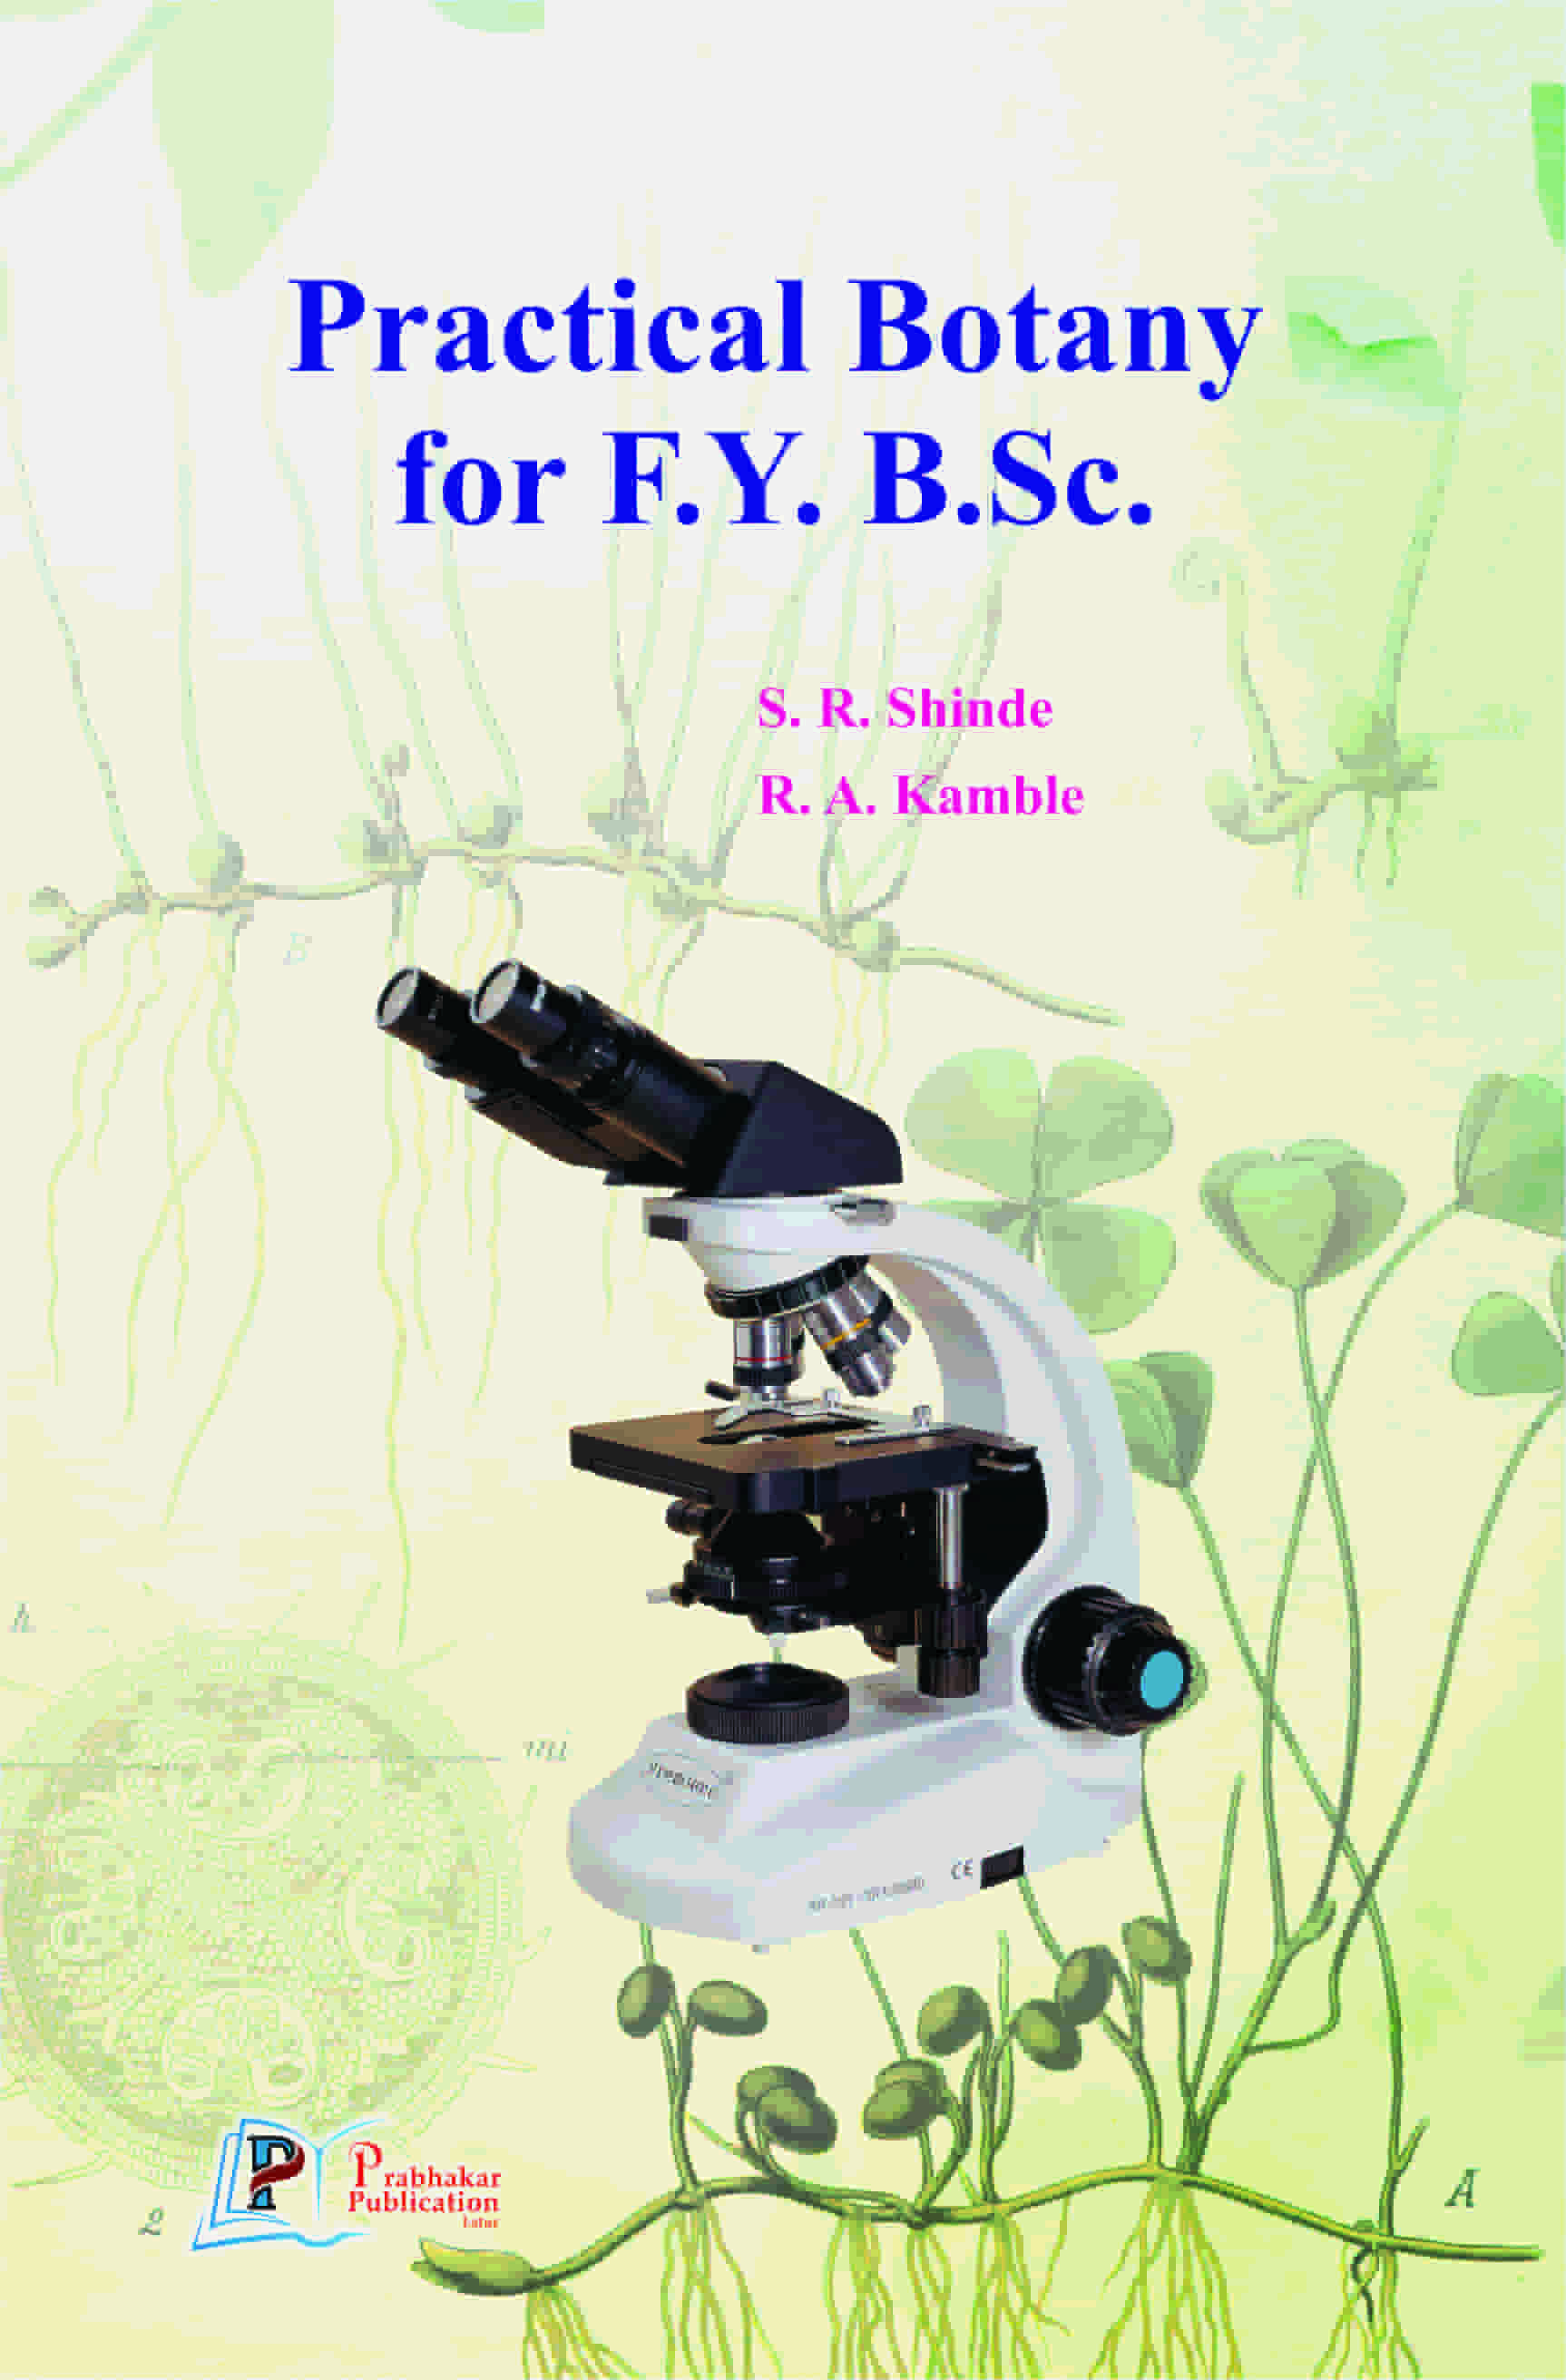 Practical Botany for F.Y. B.Sc.